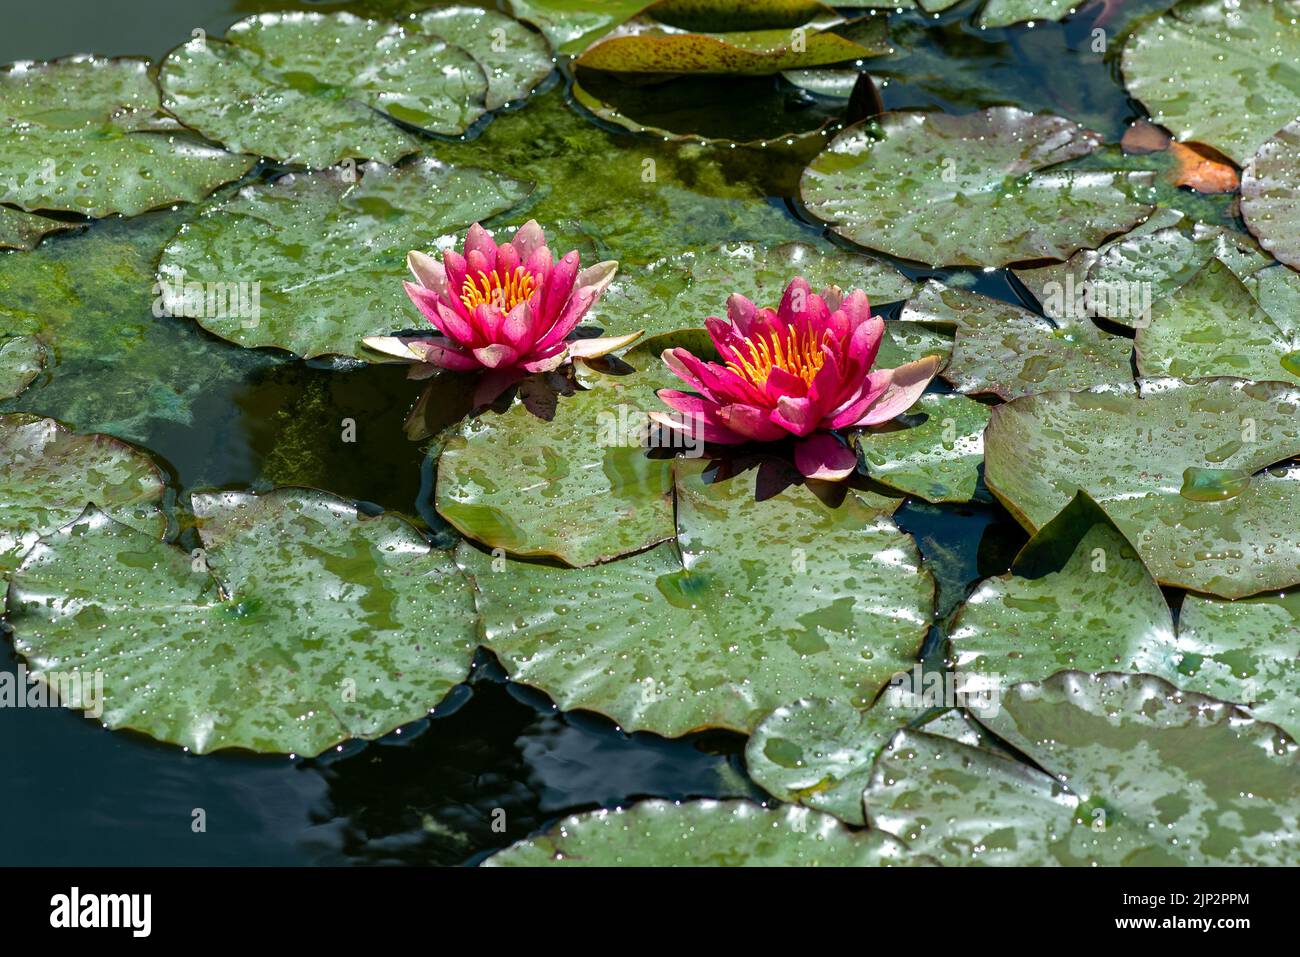 water plant, water lily pad, seerosengewächs, nymphaea, aquatic plant, water plants, lily pad, lily pads, water lilies, water lily, water lily pads Stock Photo